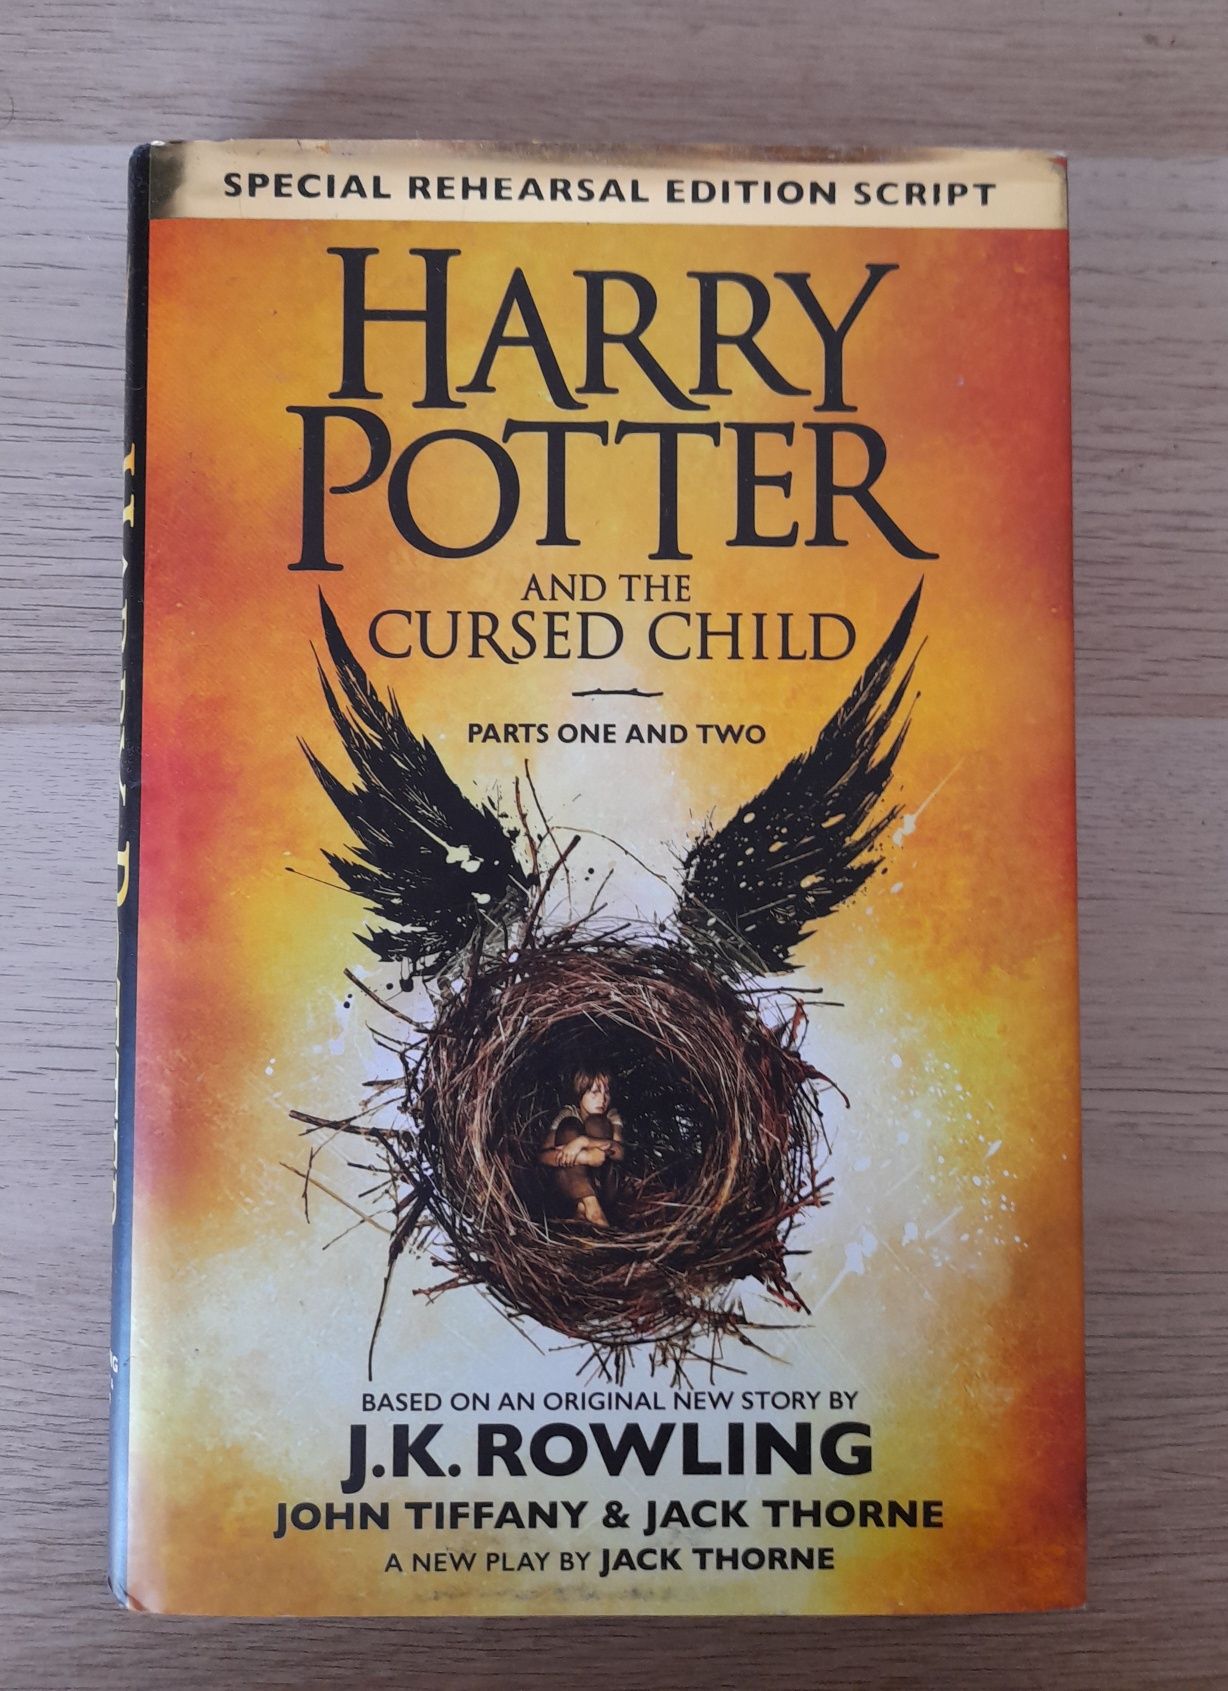 Harry Potter - Pedra Filosofal e Cursed child